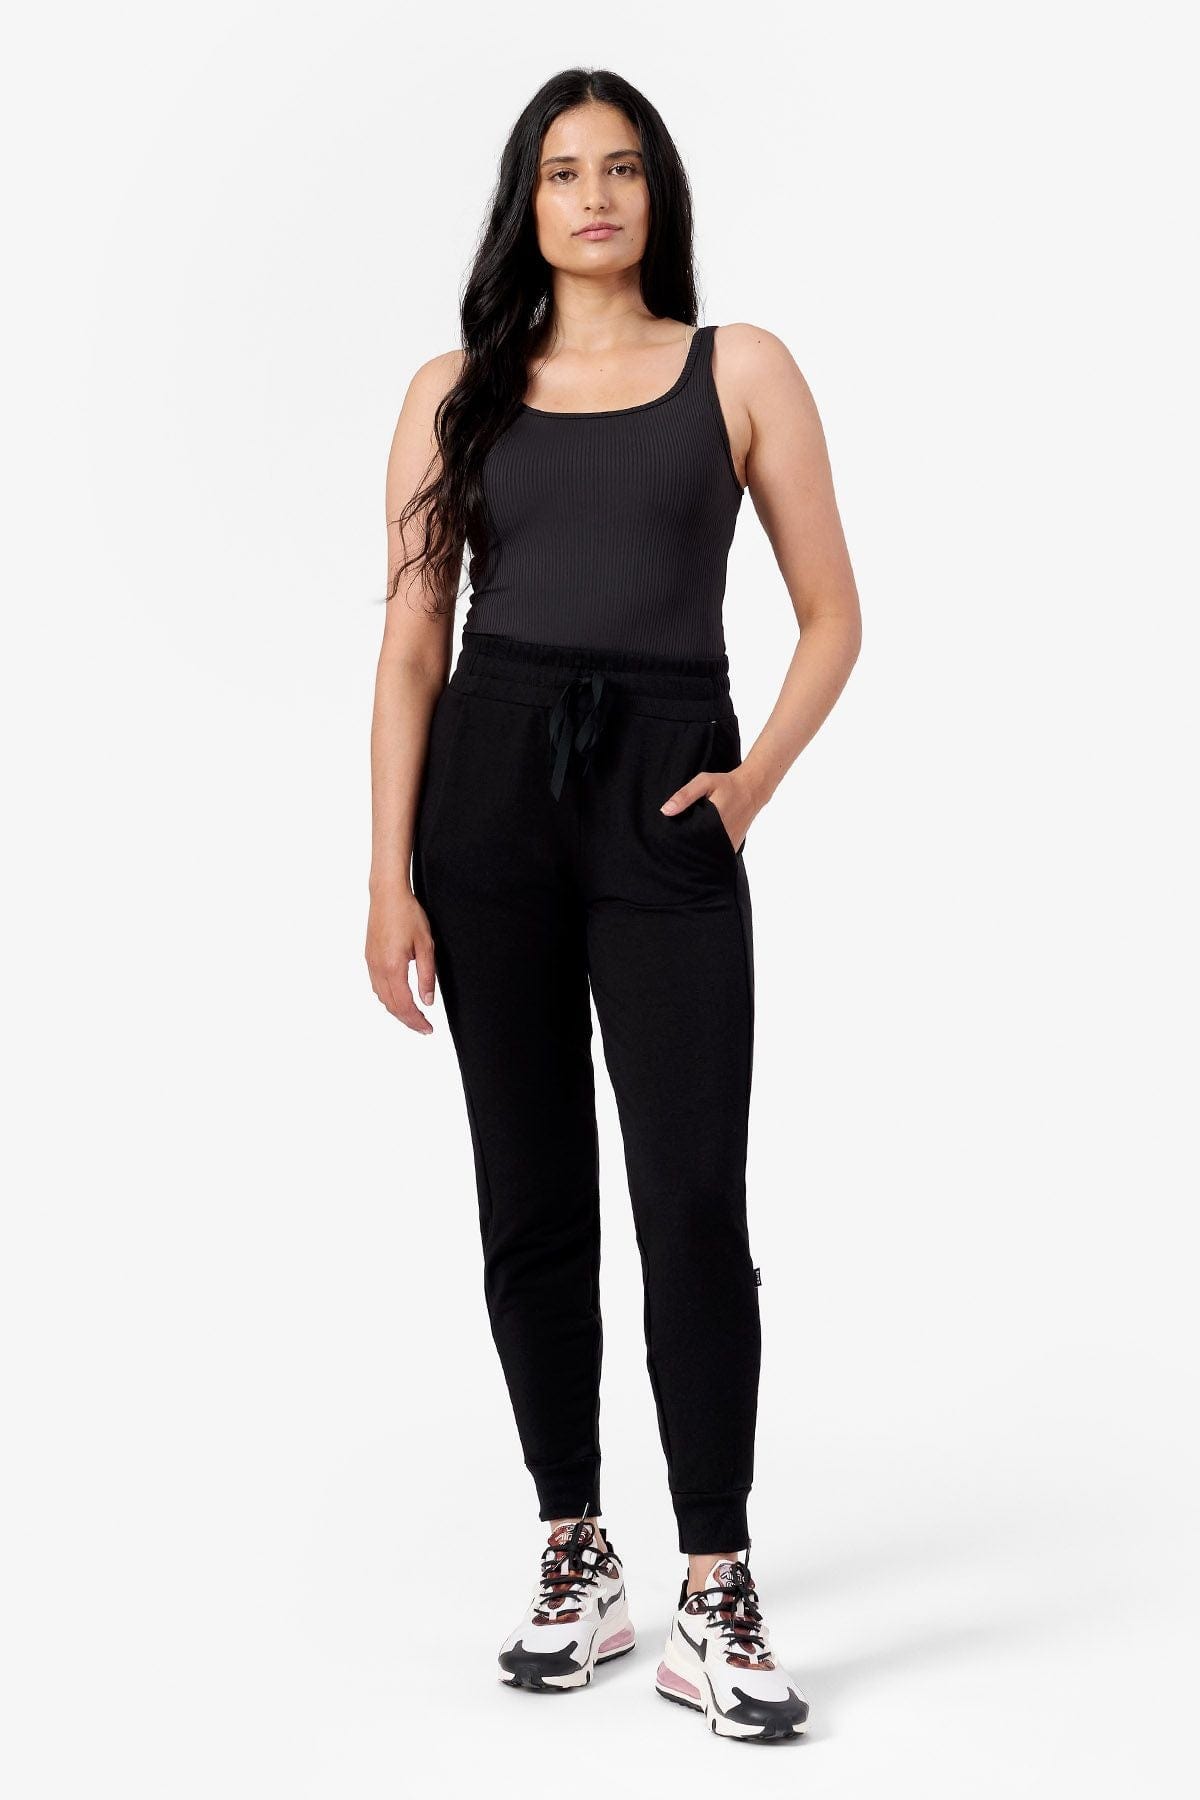 Nike Womens Leggings Pants T-Shirt Top Black Size S XL Lot 2 - Shop Linda's  Stuff